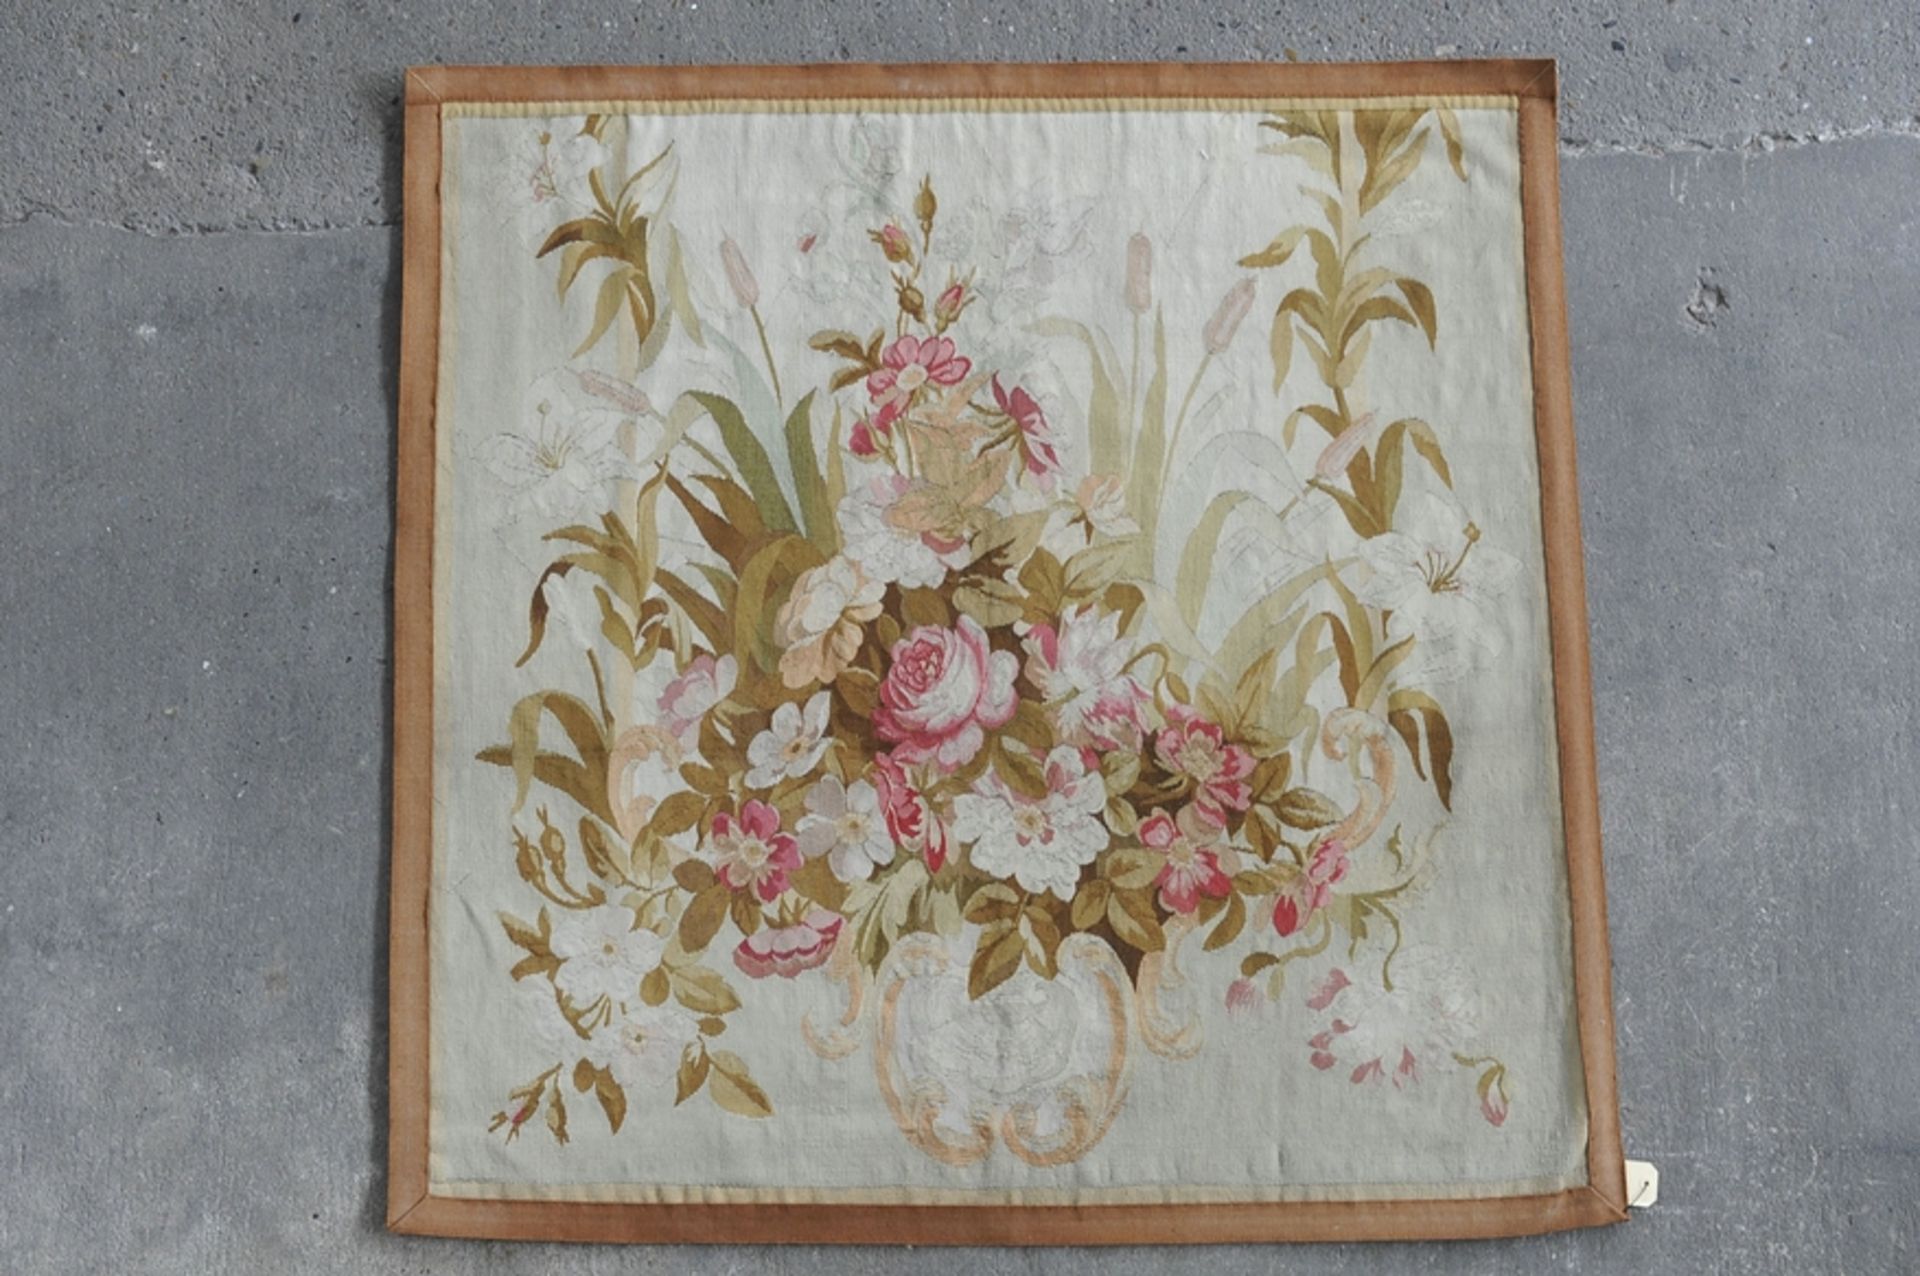 Antike Gobelin-Stickerei um 1900/20, florales Dekor, ca. 136 x 136 cm inklusive Stoffumrandung. Ver